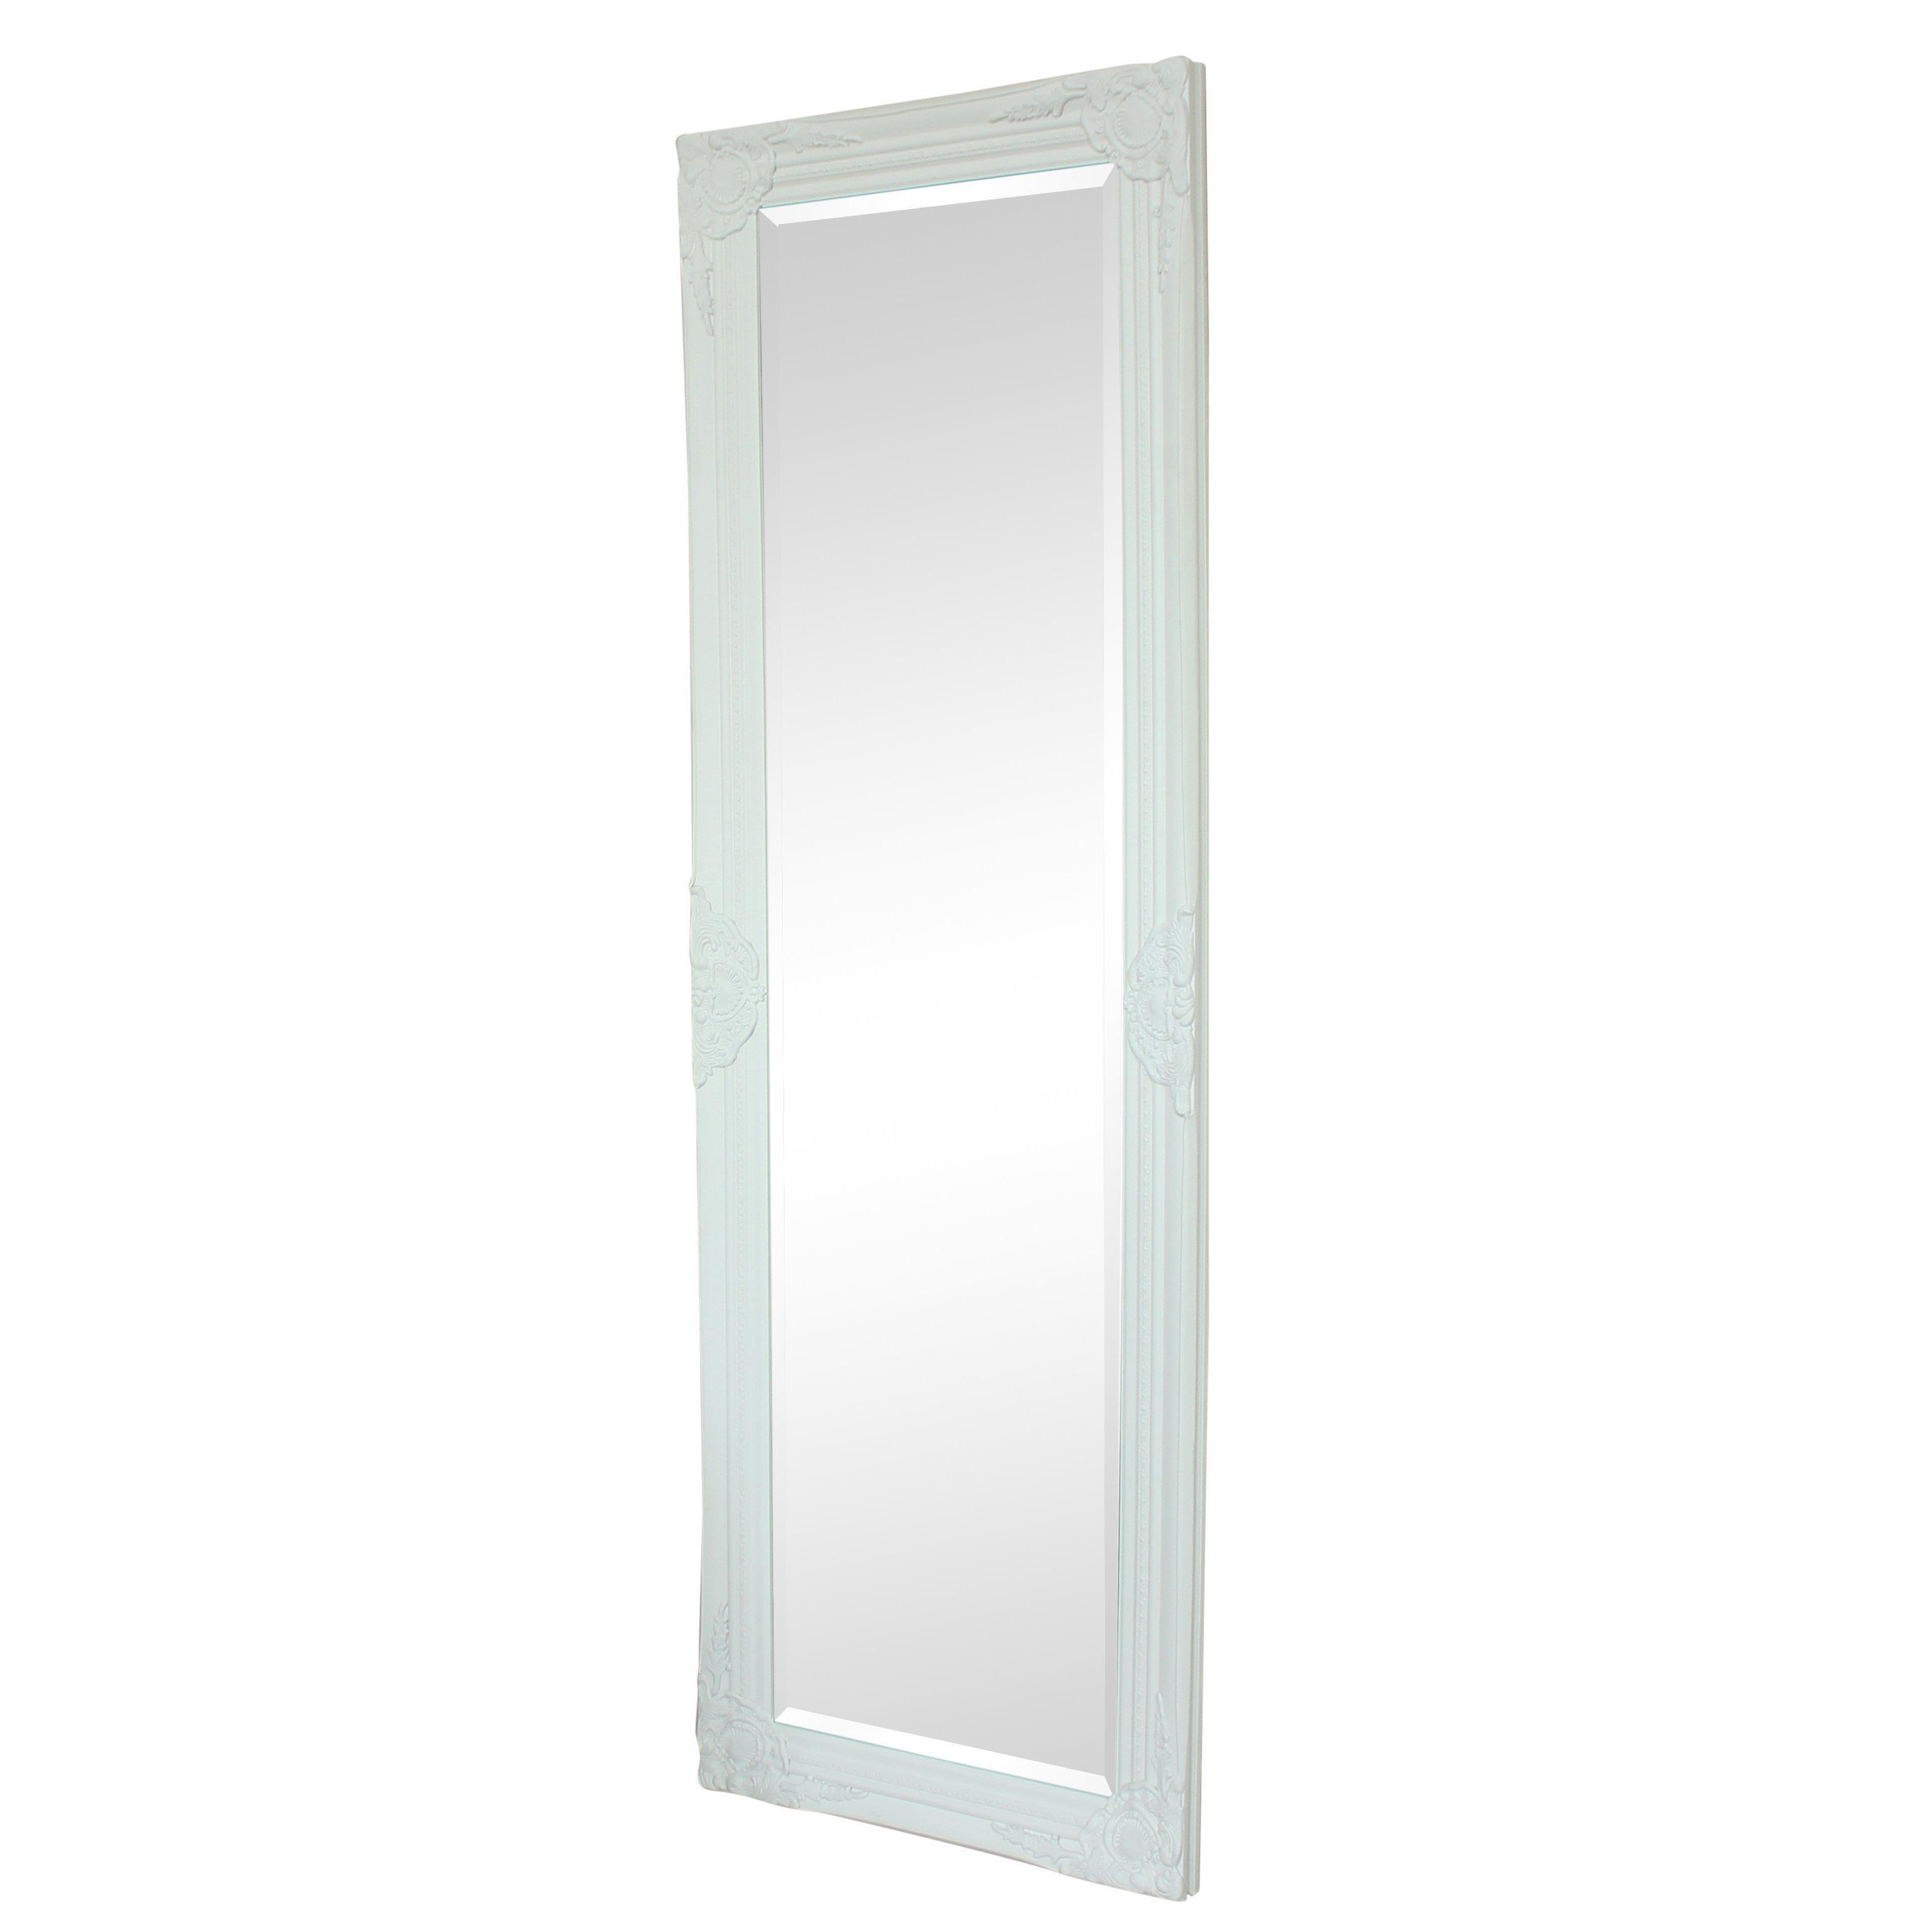 Tall / Long White Ornate Wall / Leaner Mirror 47cm X 142cm - image 1